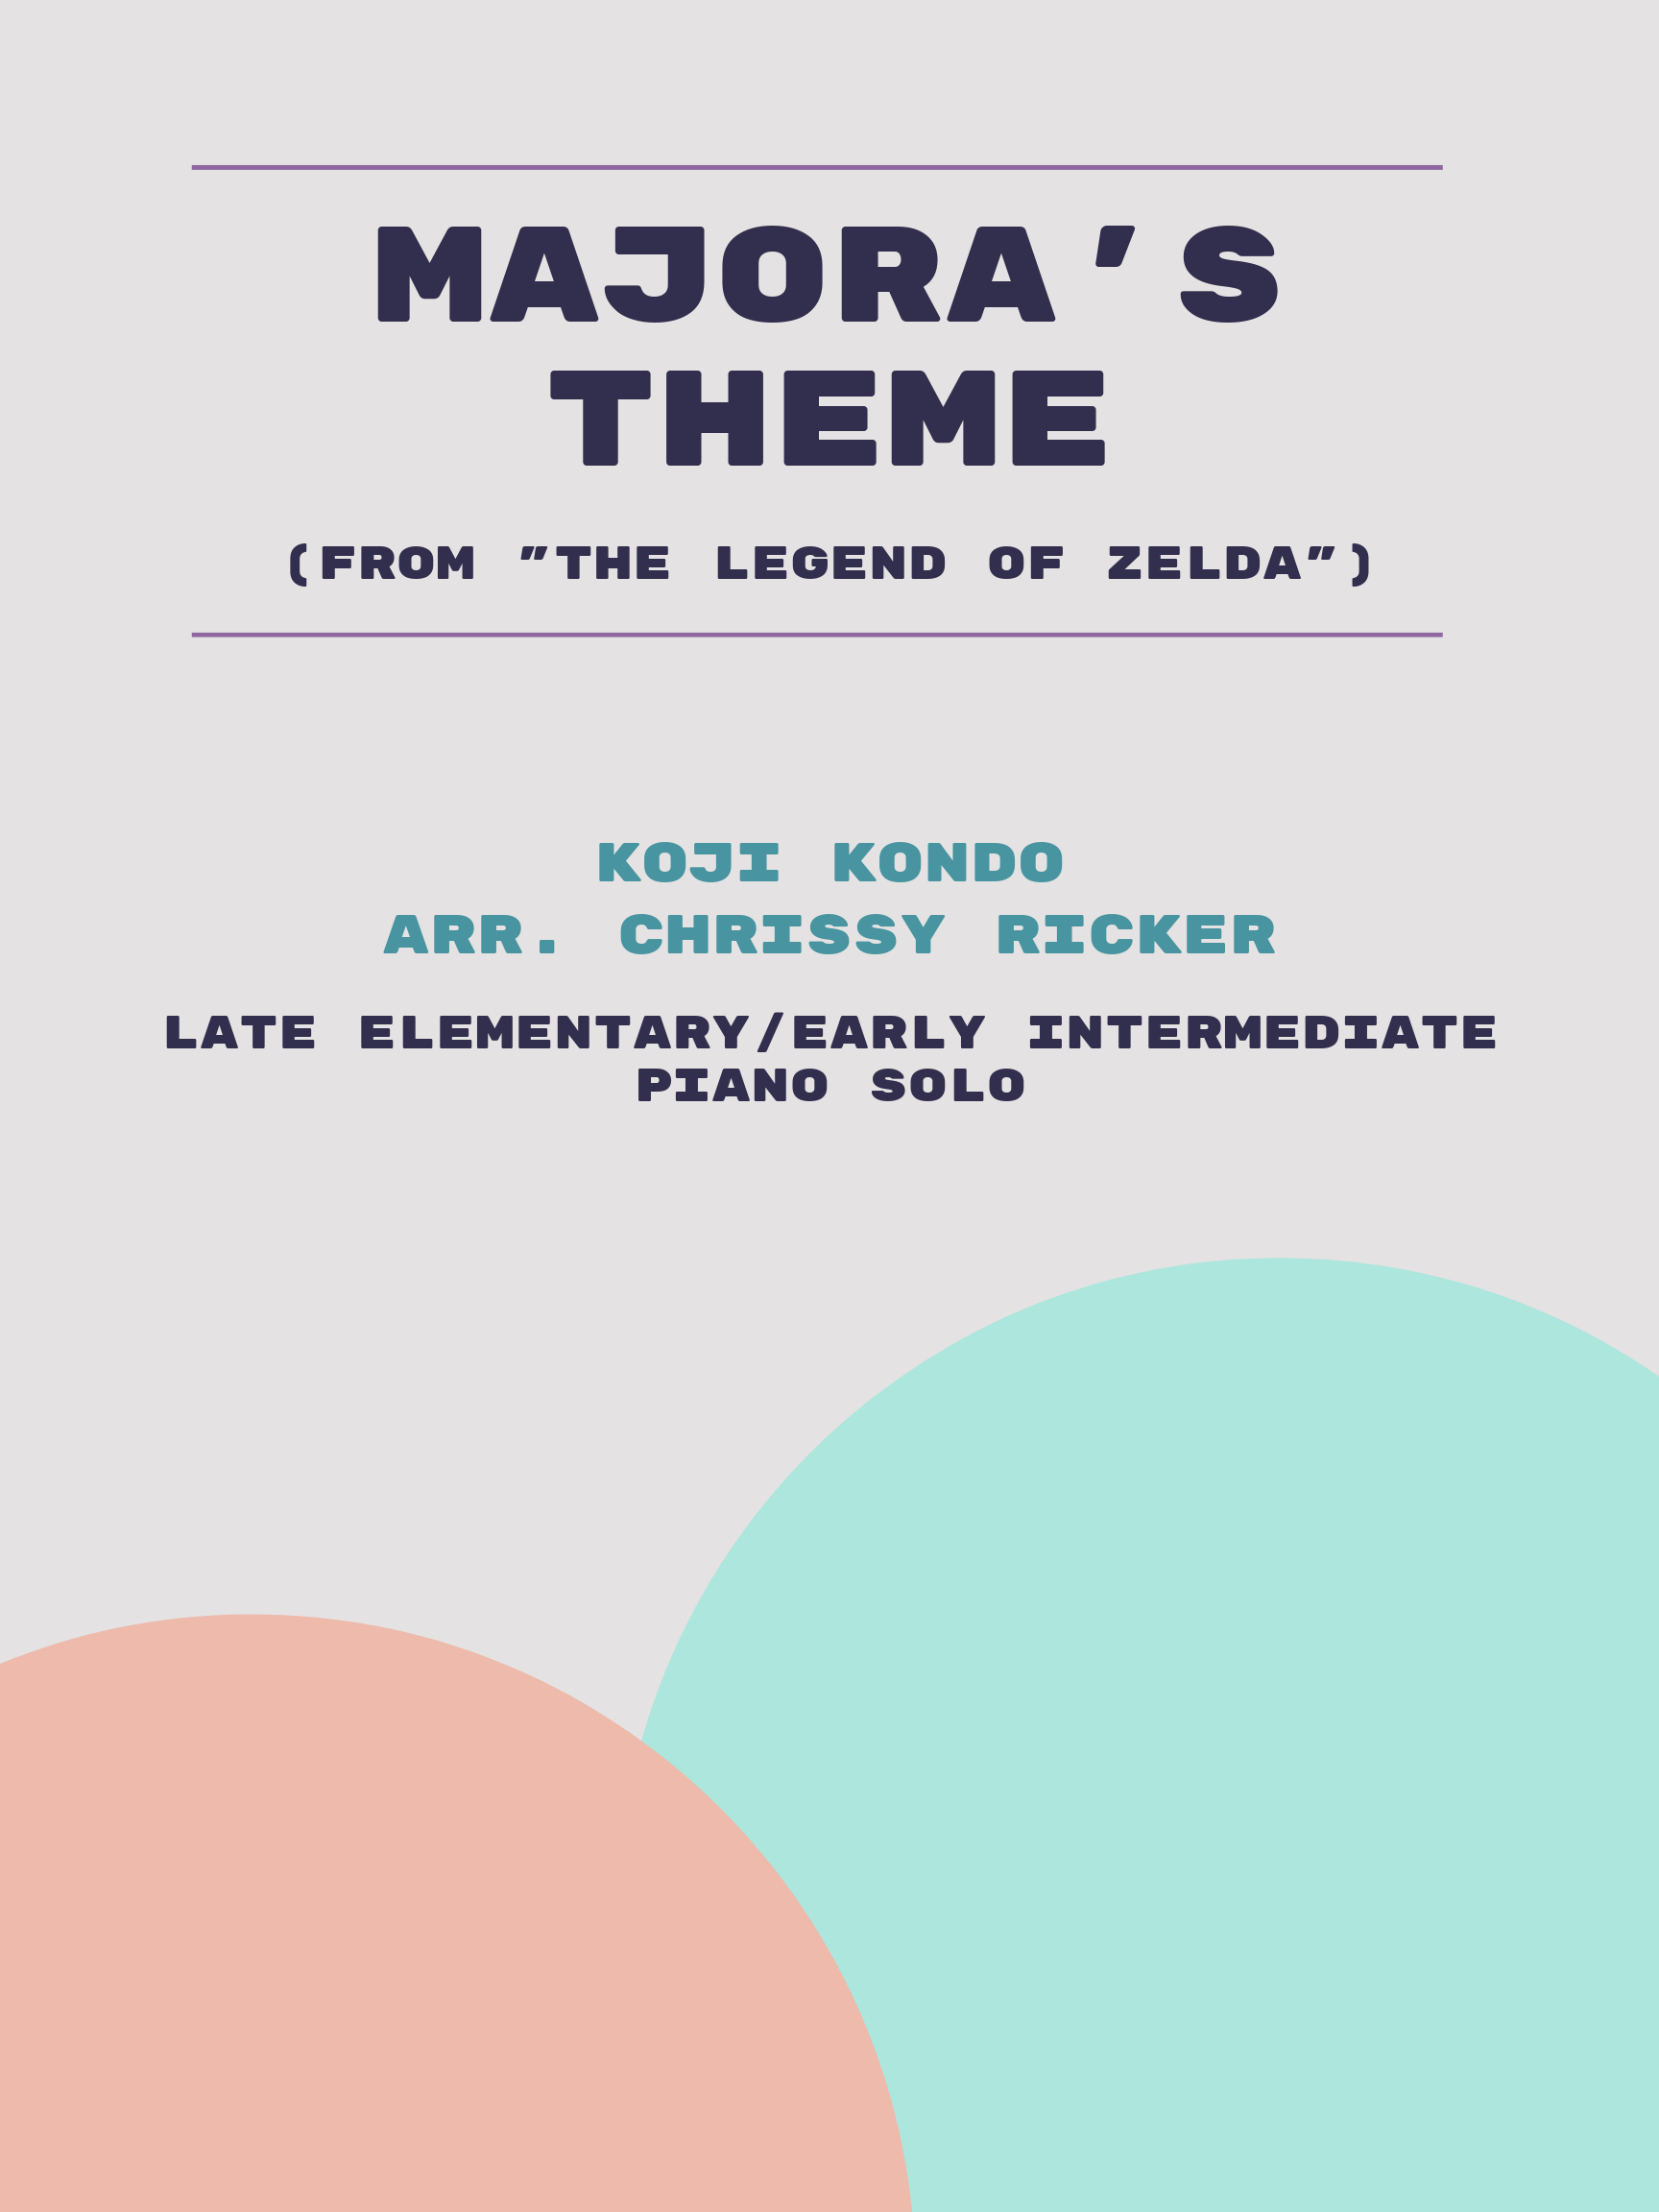 Majora's Theme by Koji Kondo